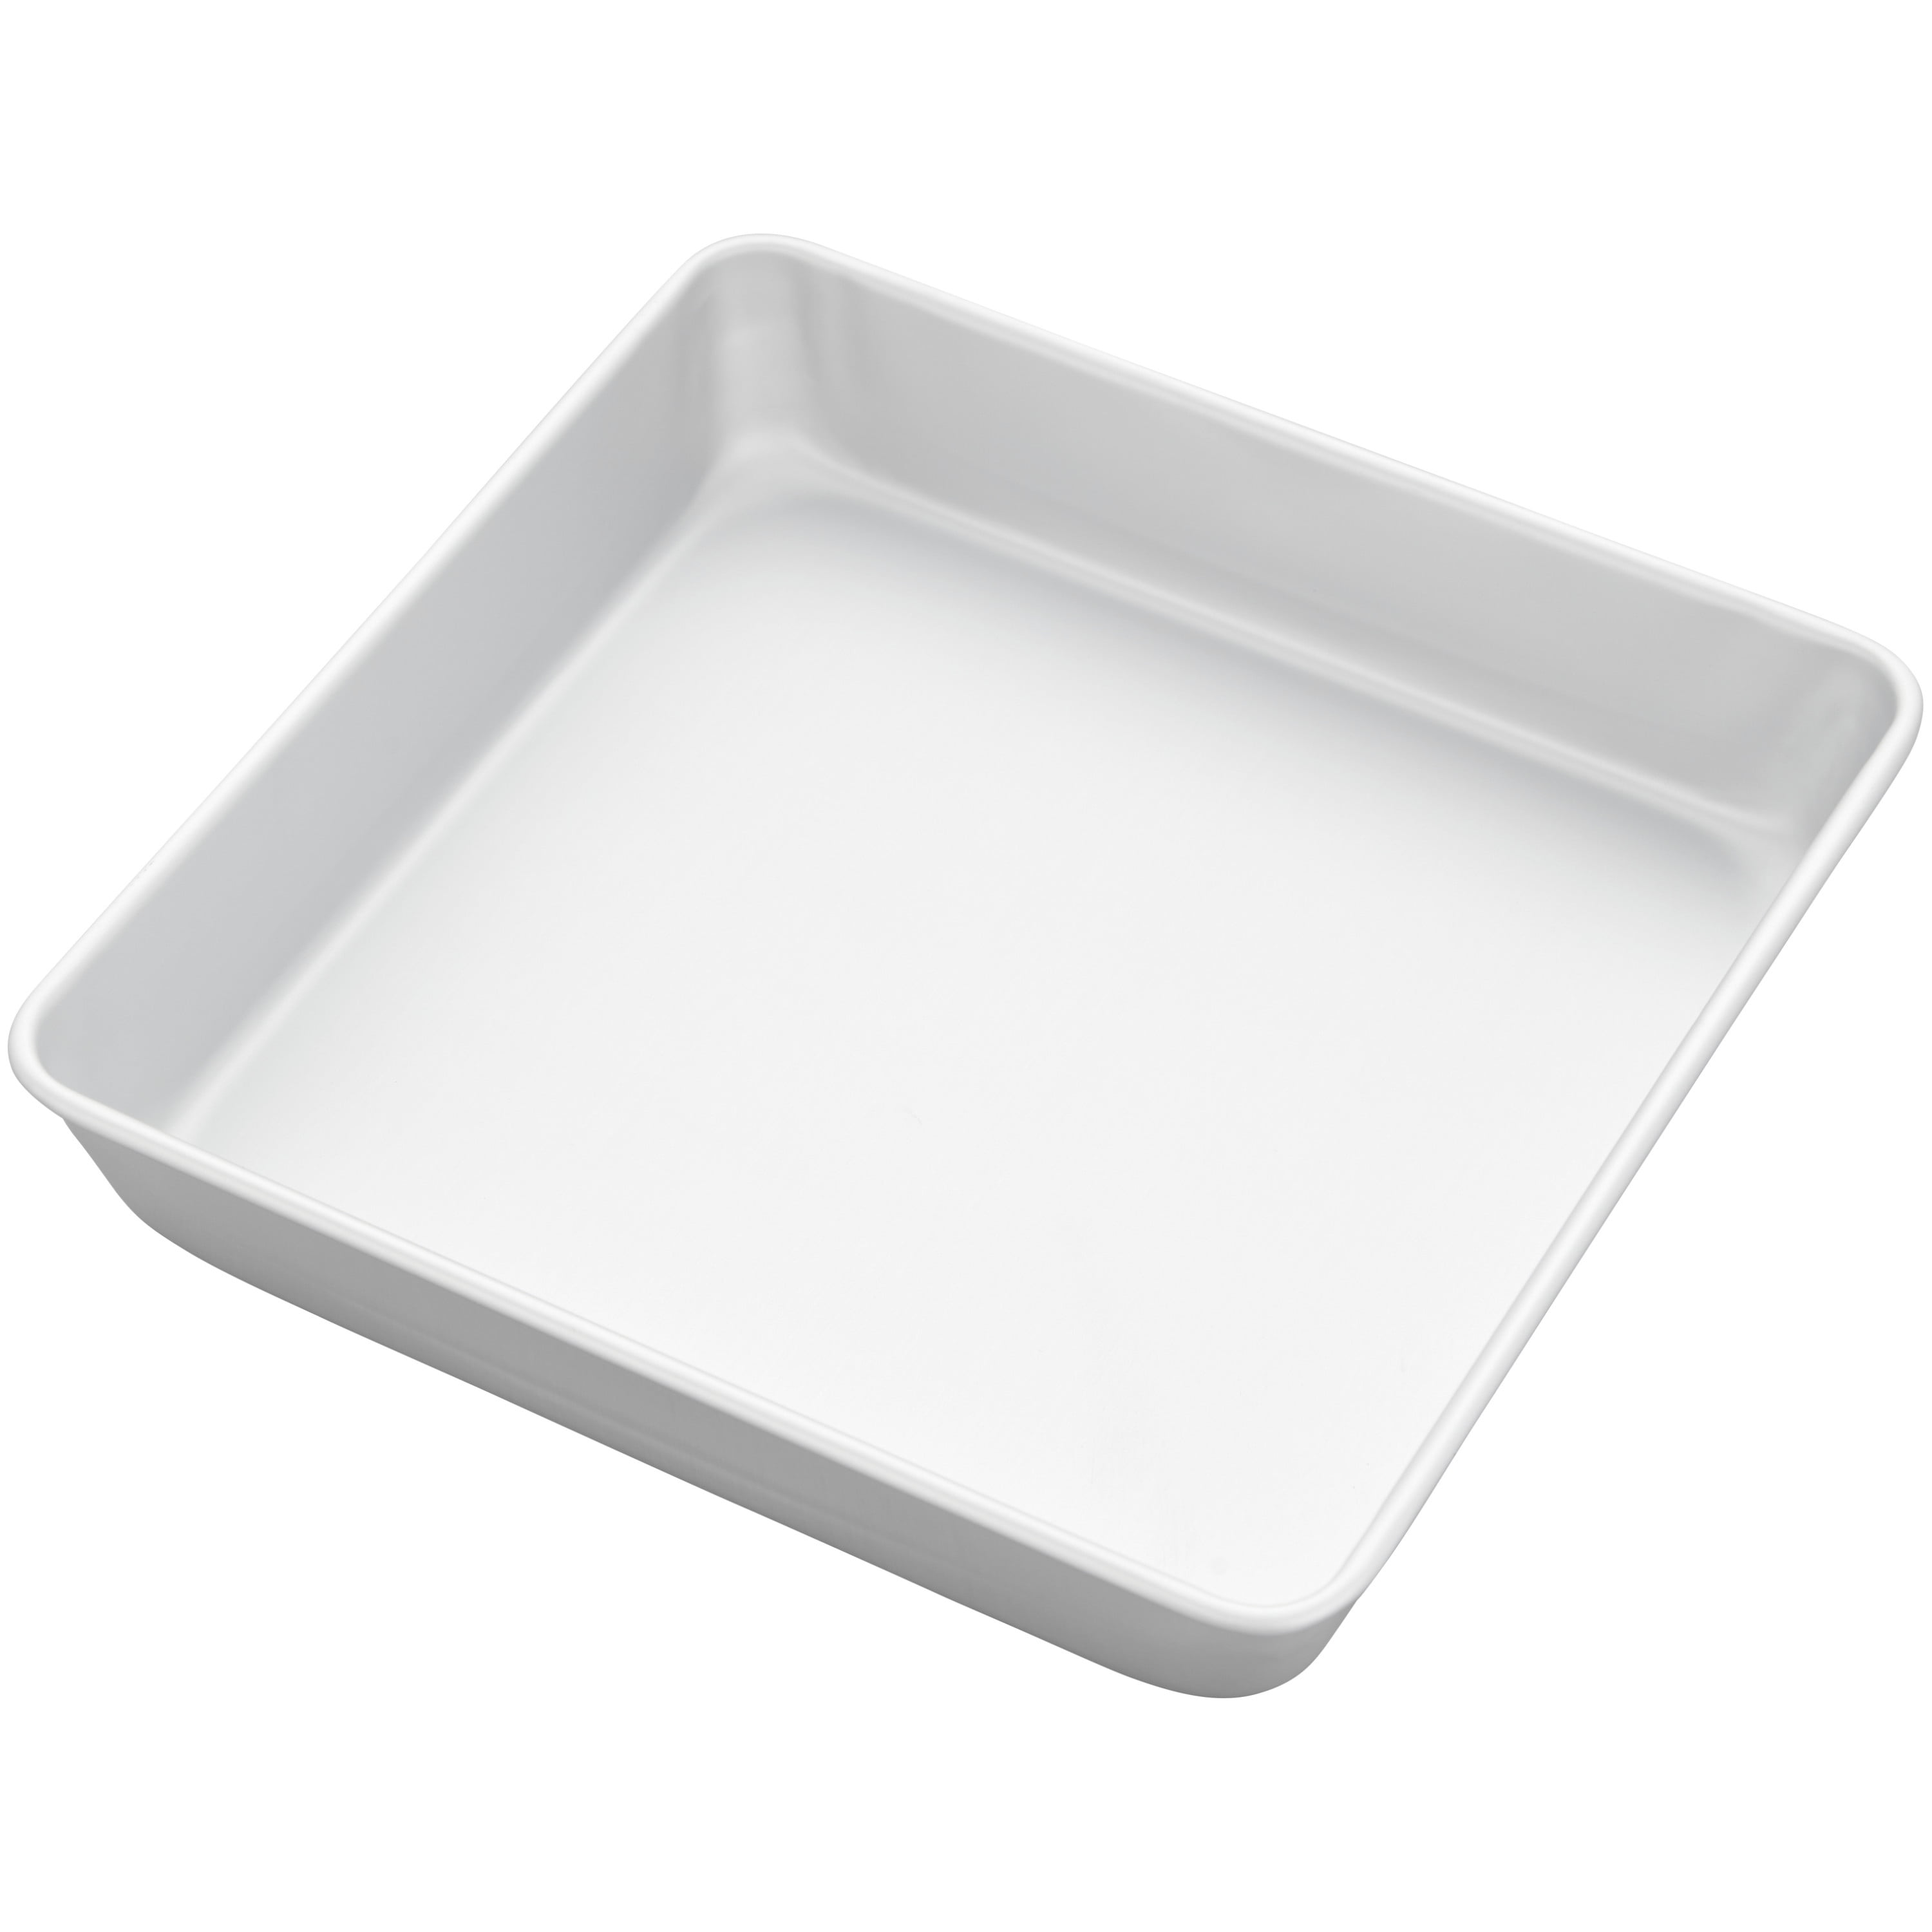 6-Count Wilton Disposable Square Baking Pans With Lids